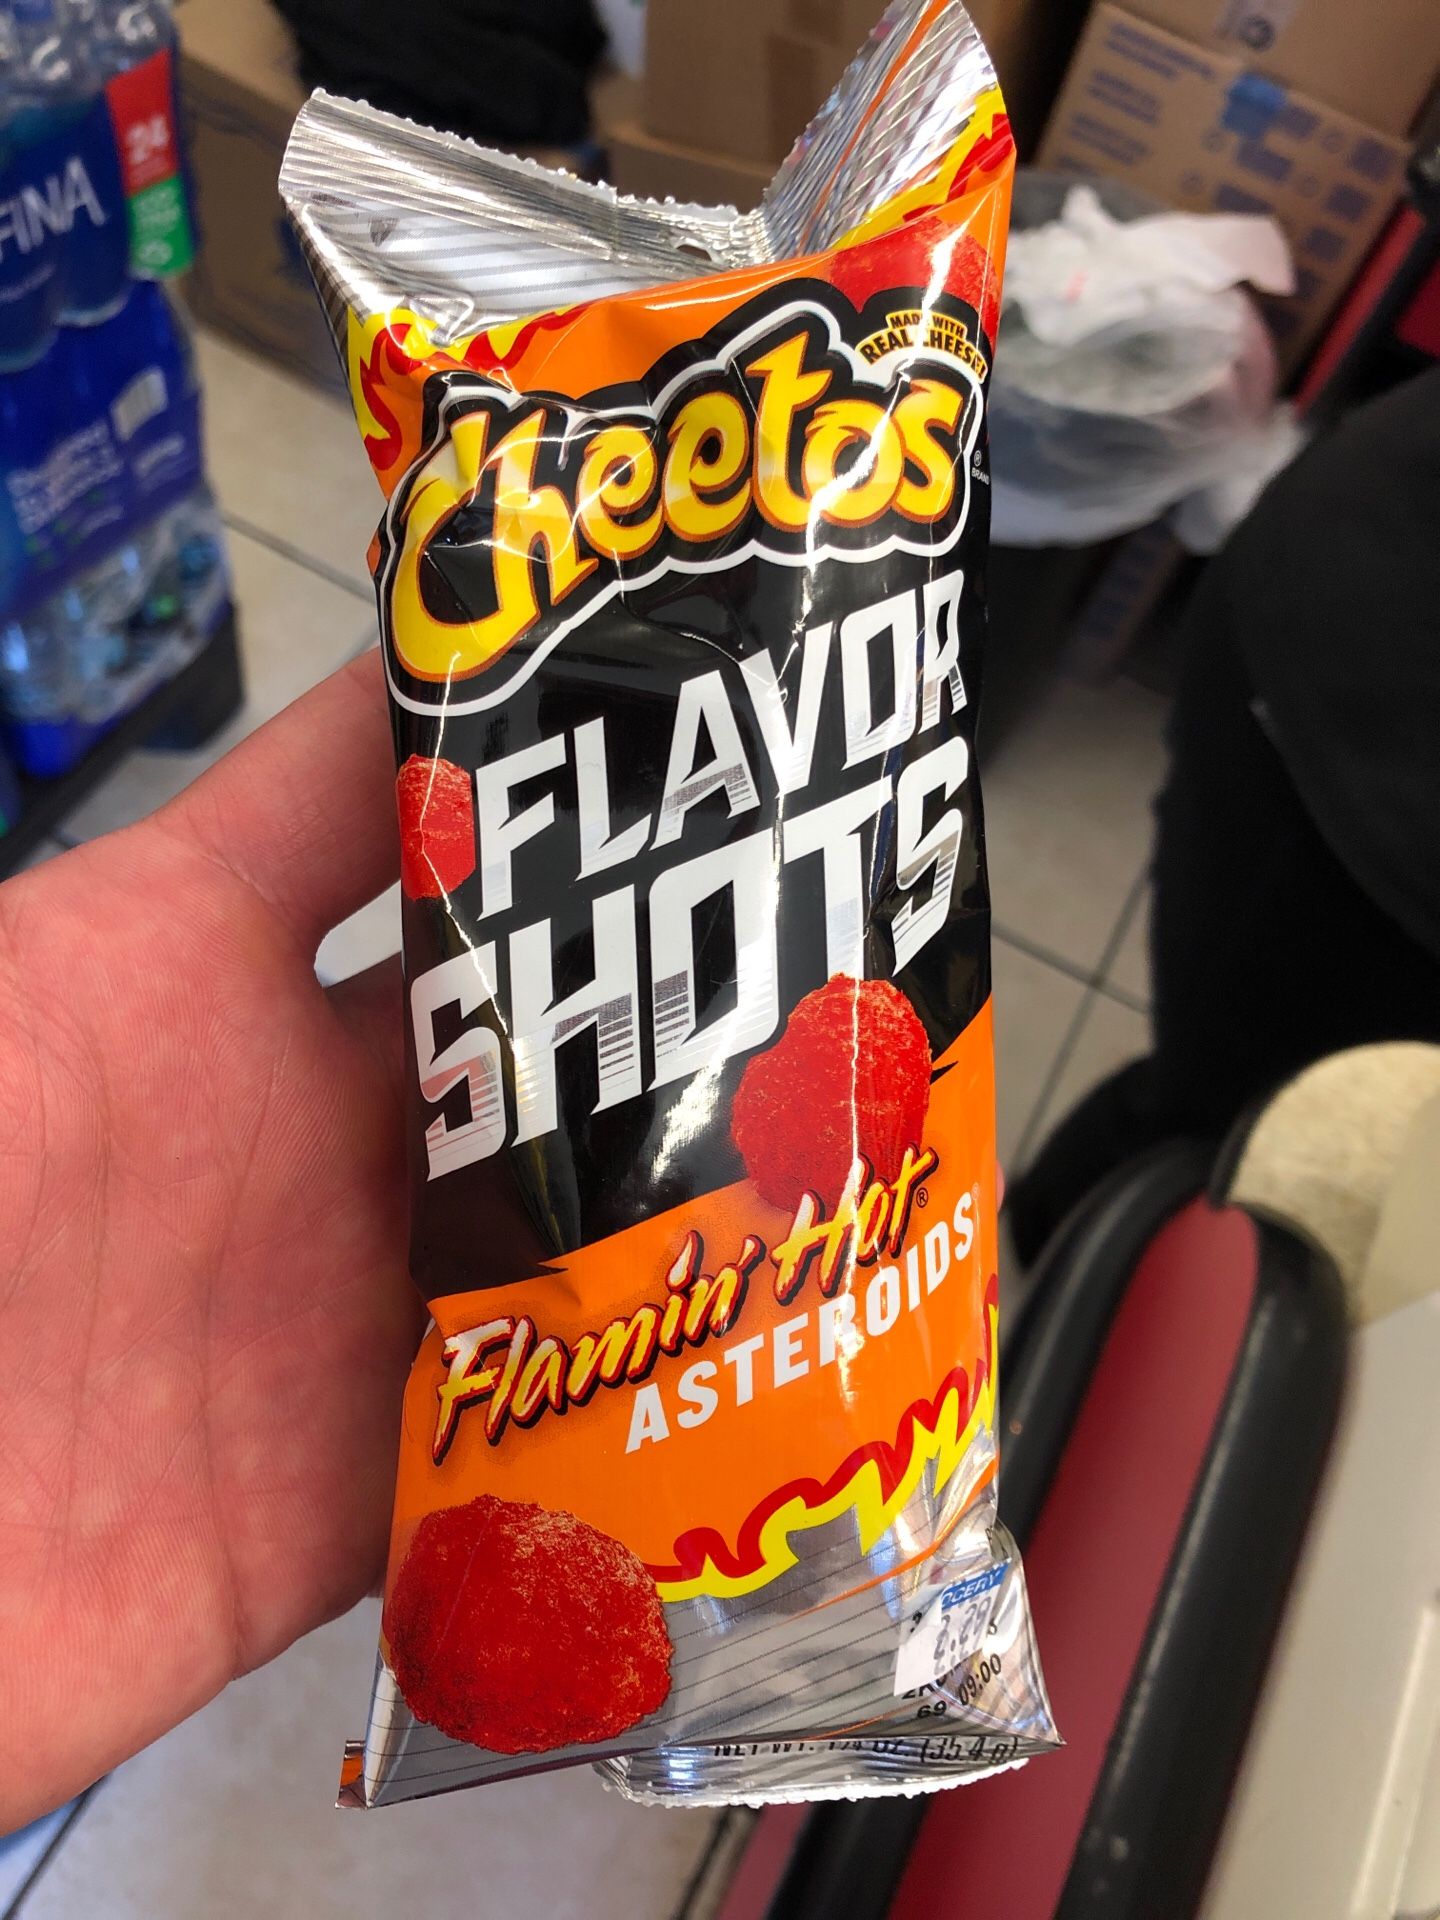 Cheetos asteroids